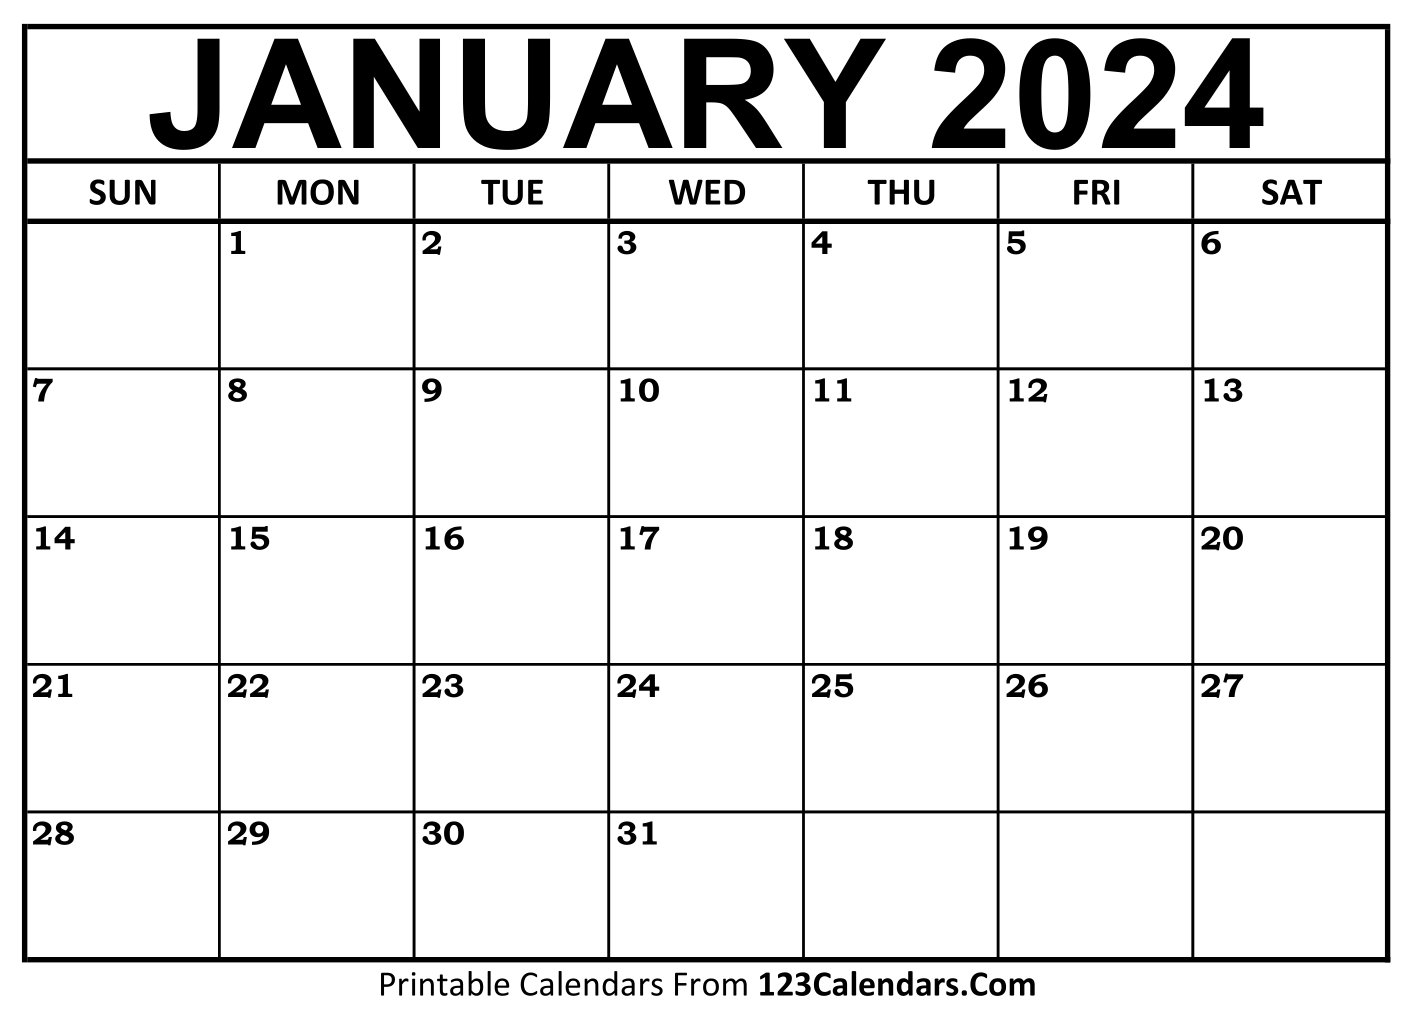 Printable January 2024 Calendar Templates - 123Calendars for Printable January 2024 Monthly Calendar